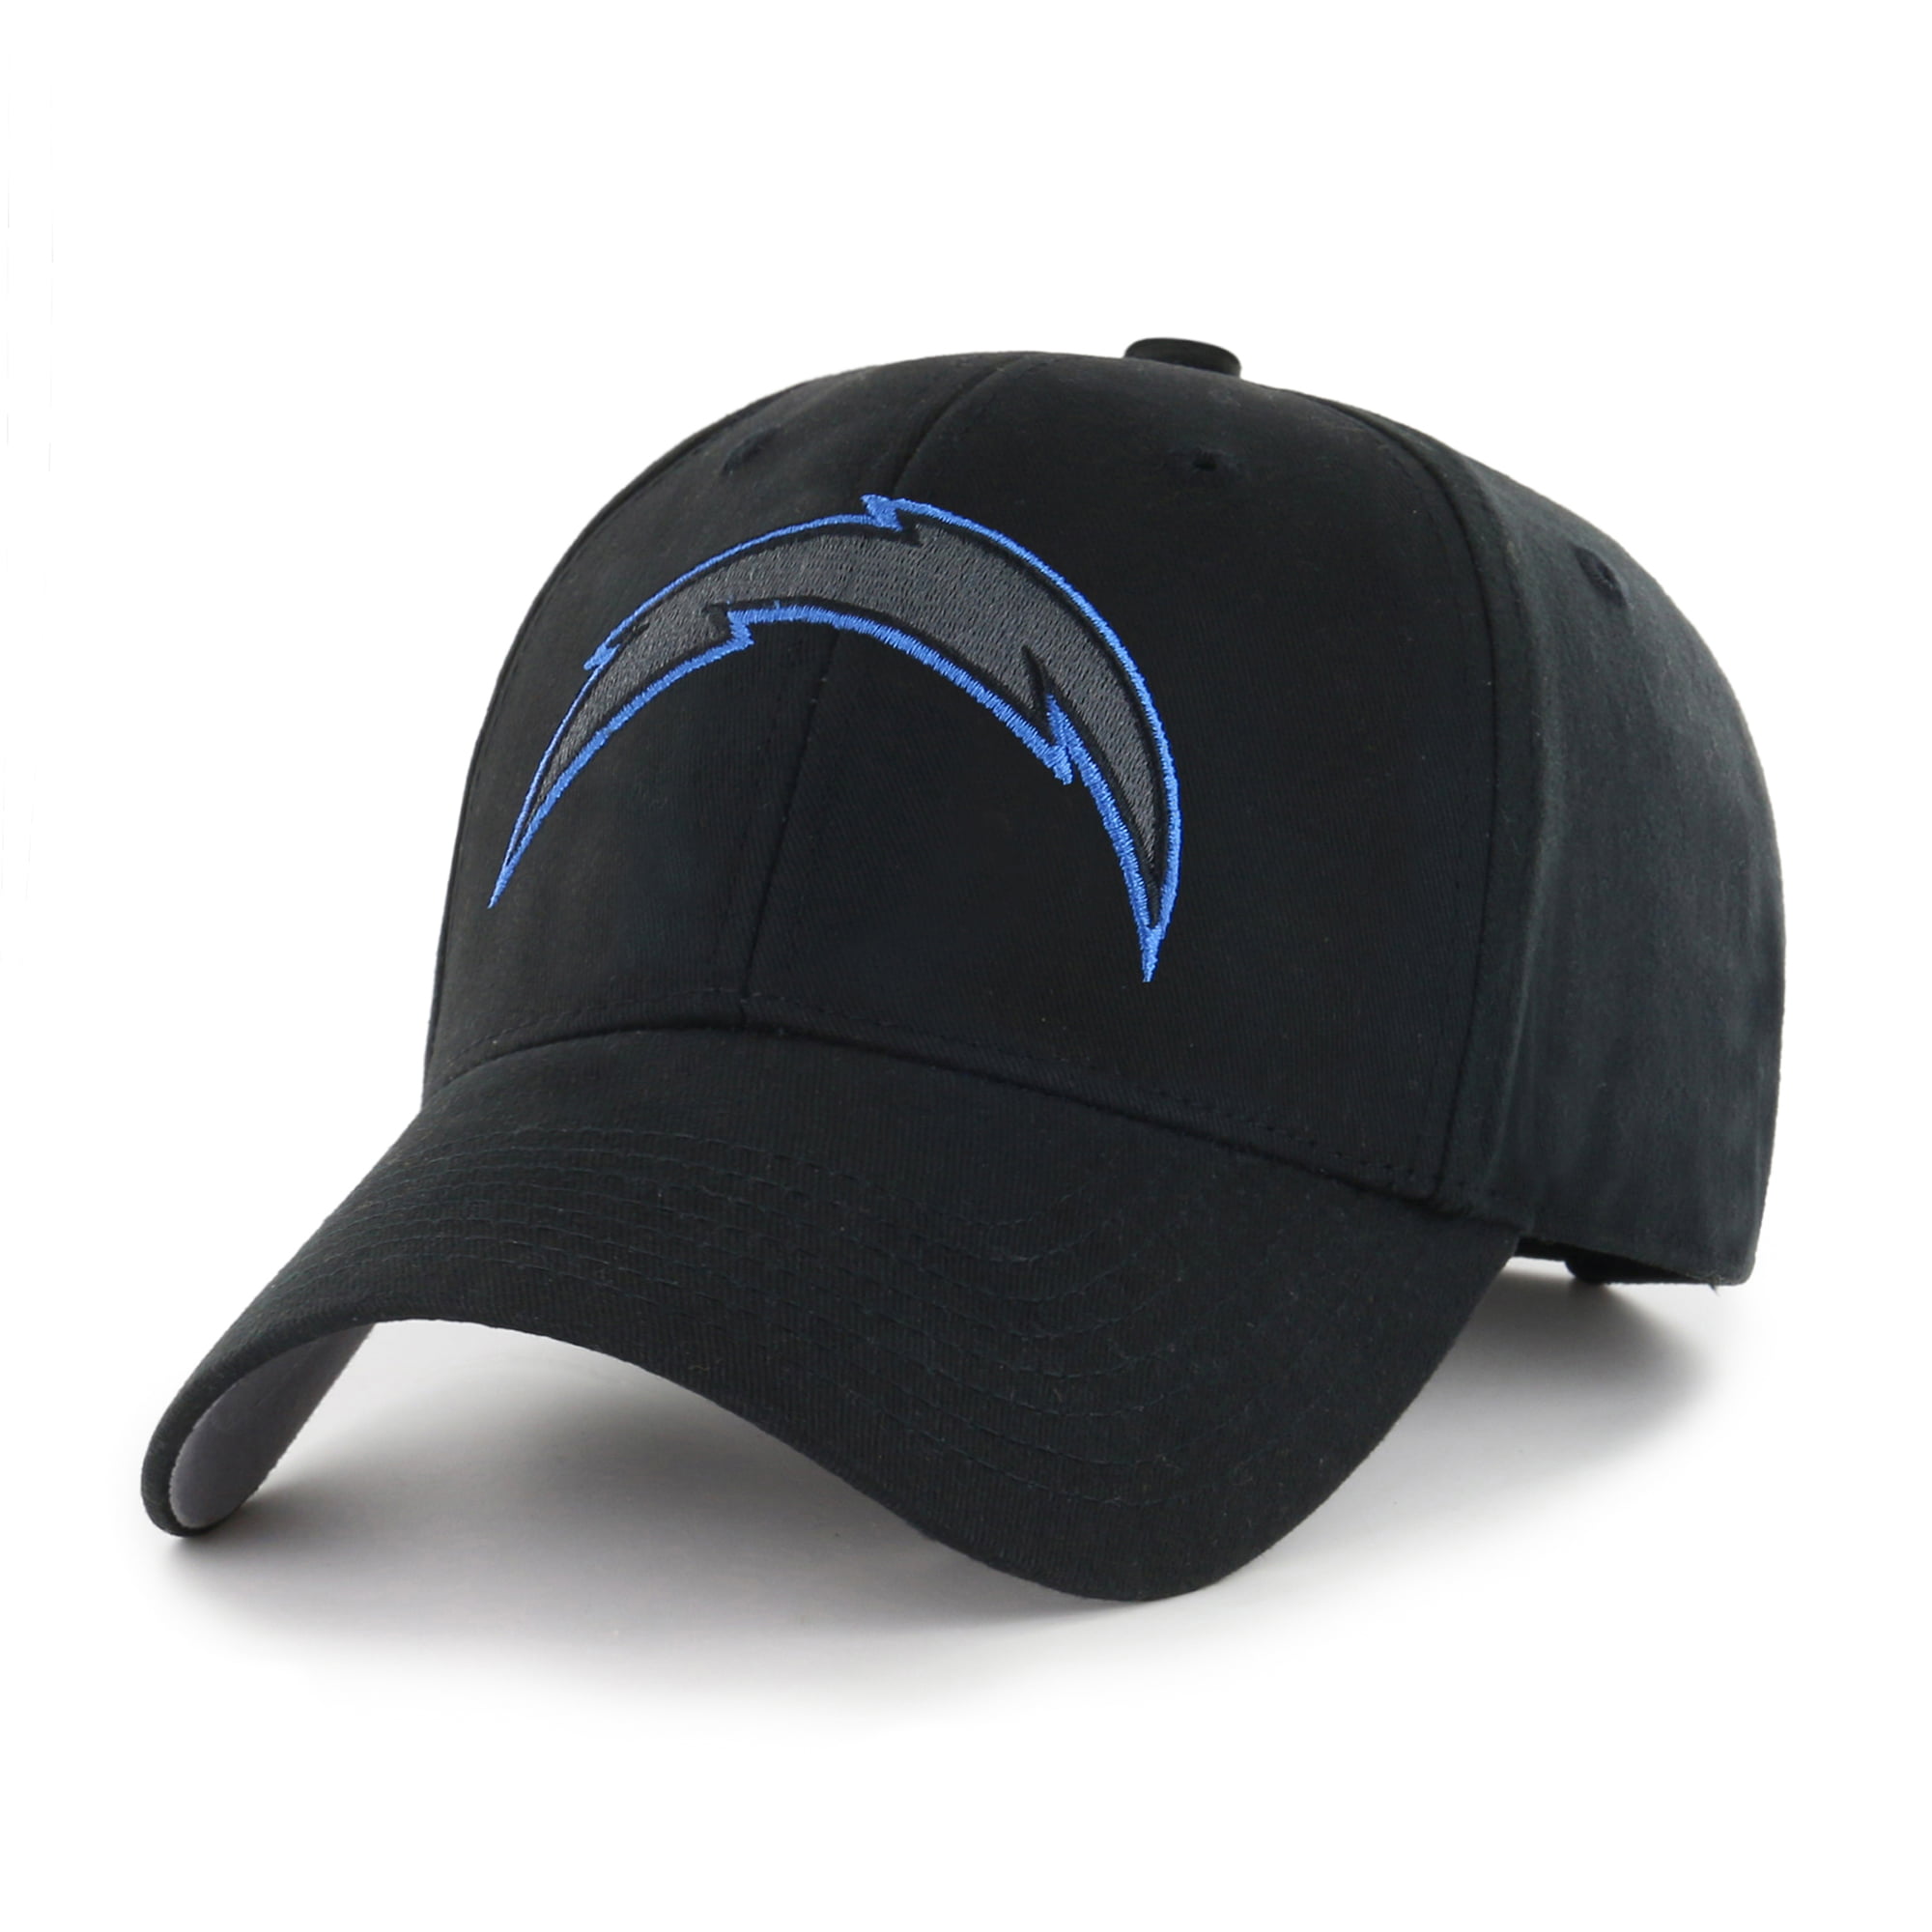 NFL Los Angeles Chargers Black Mass Basic Adjustable Cap/Hat by Fan Favorite - Walmart.com